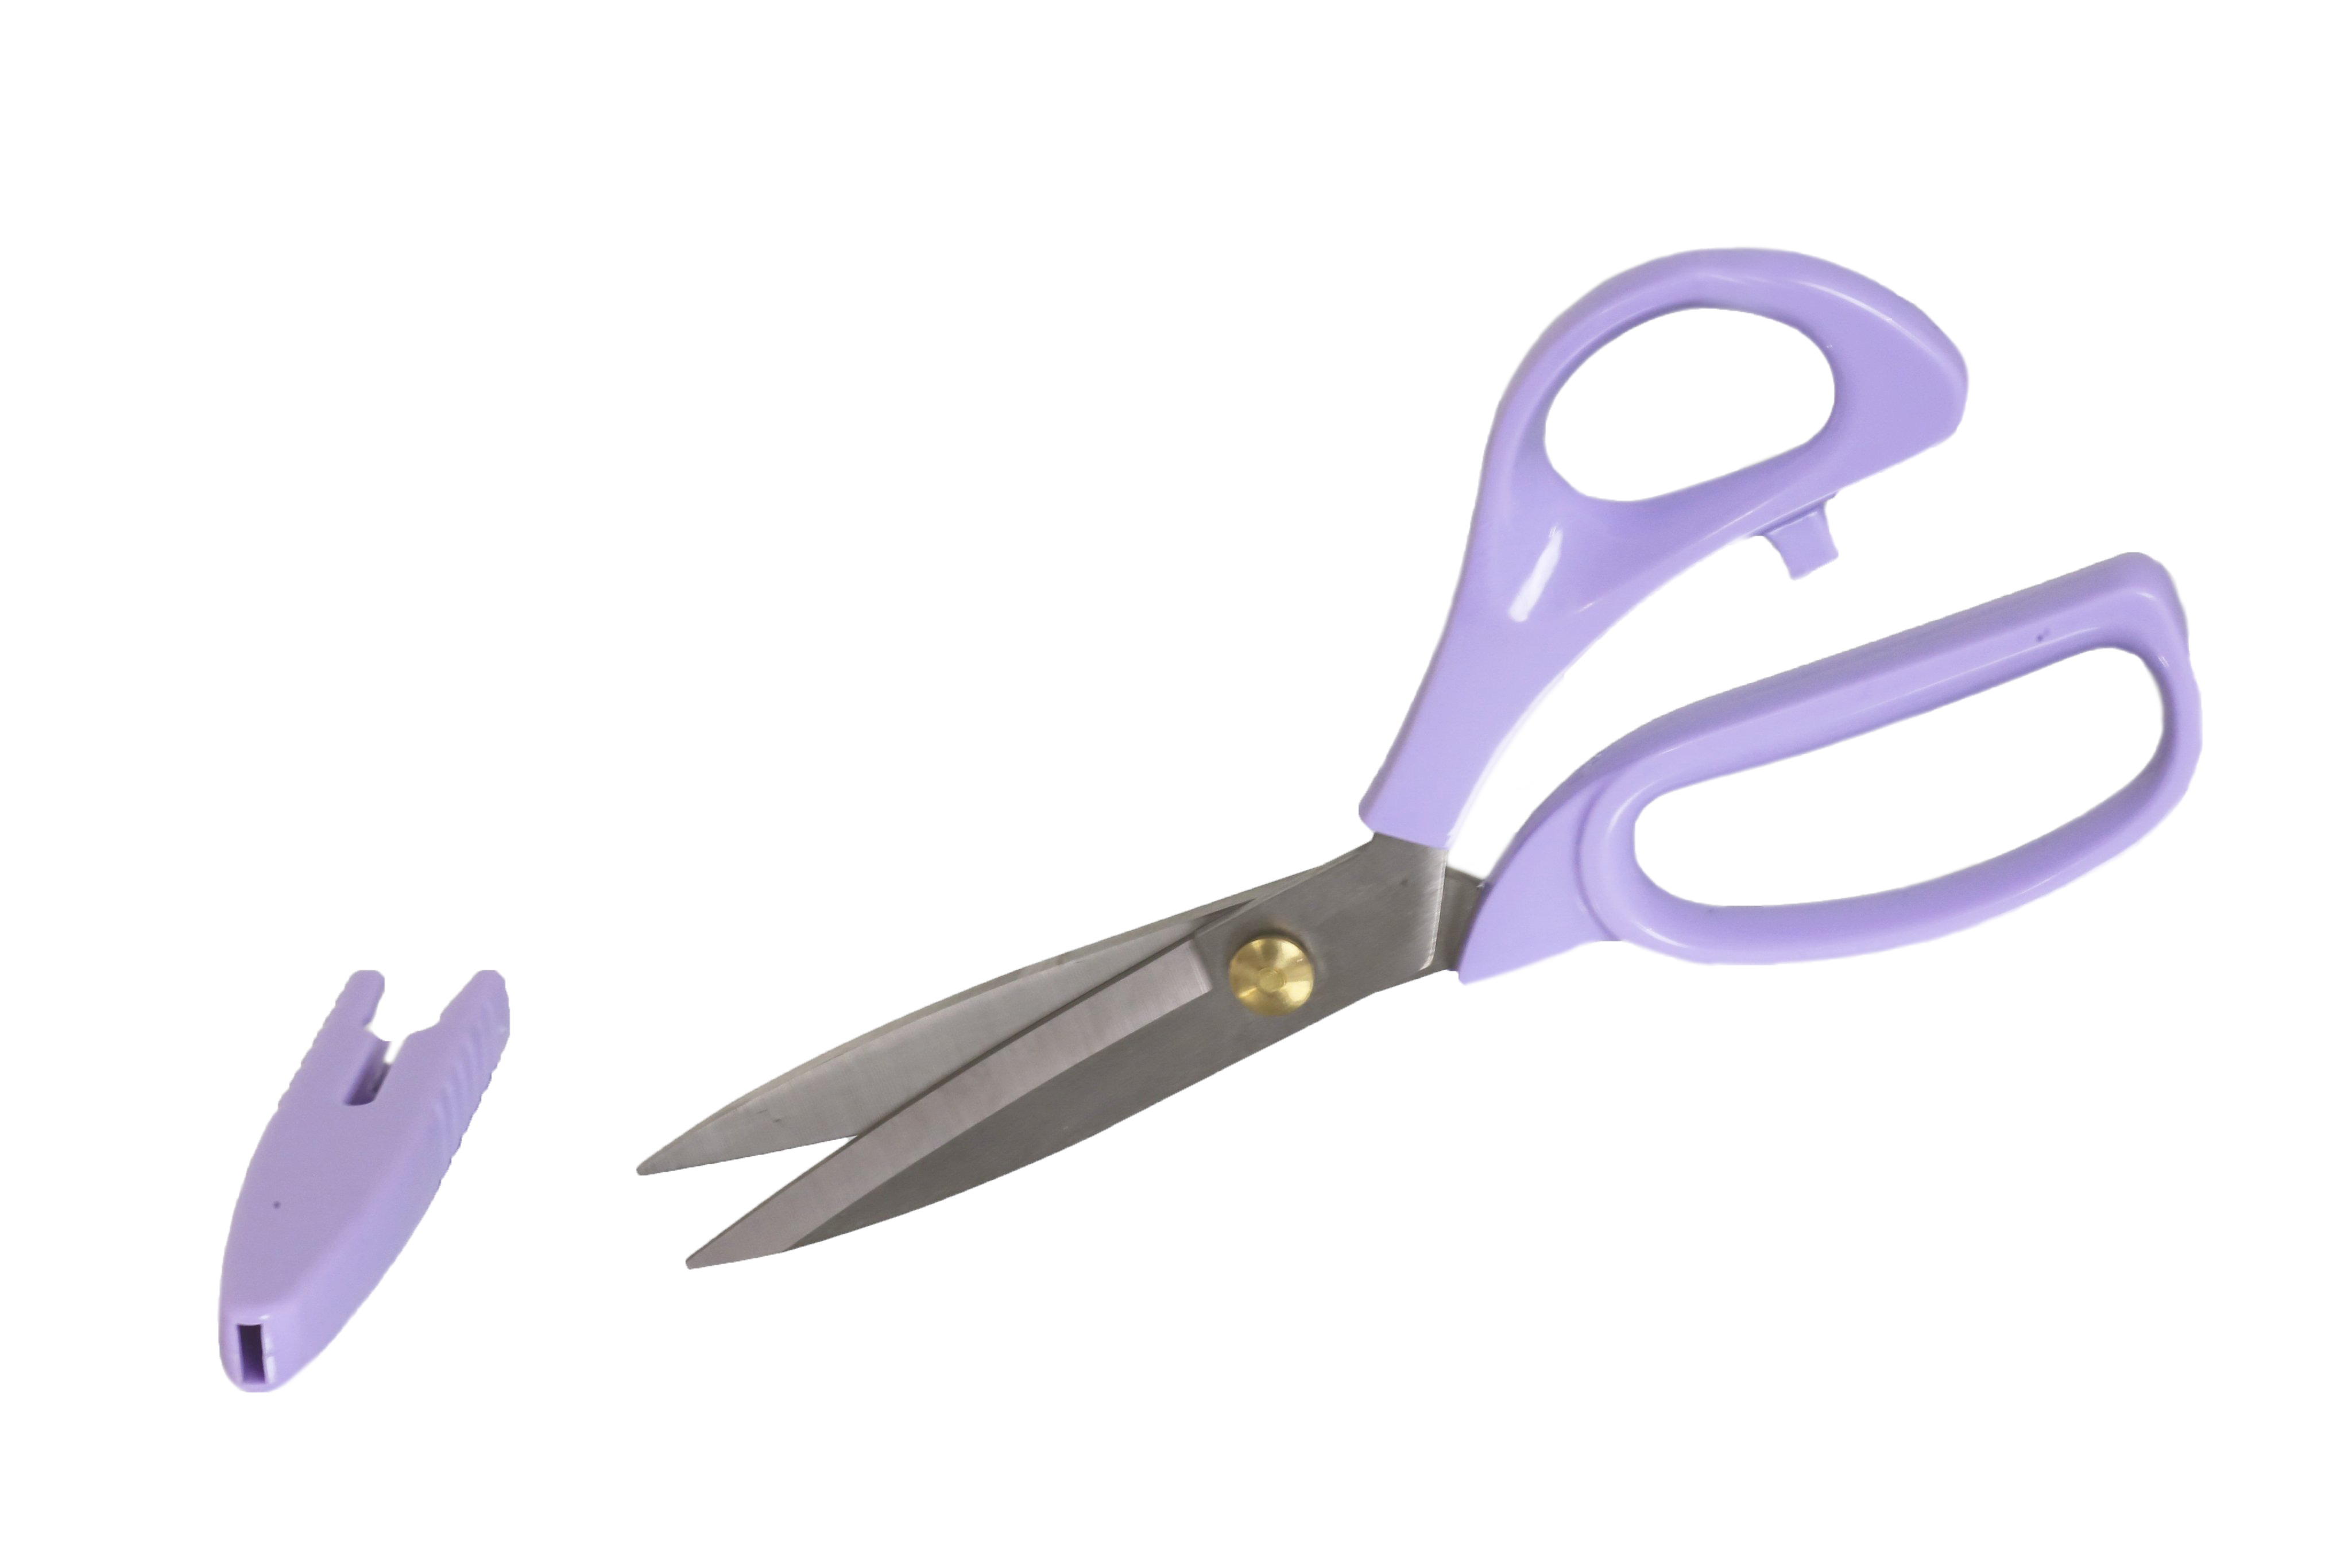 LMDZ Purple Tailor Scissors for Fabric Cutter Needlework